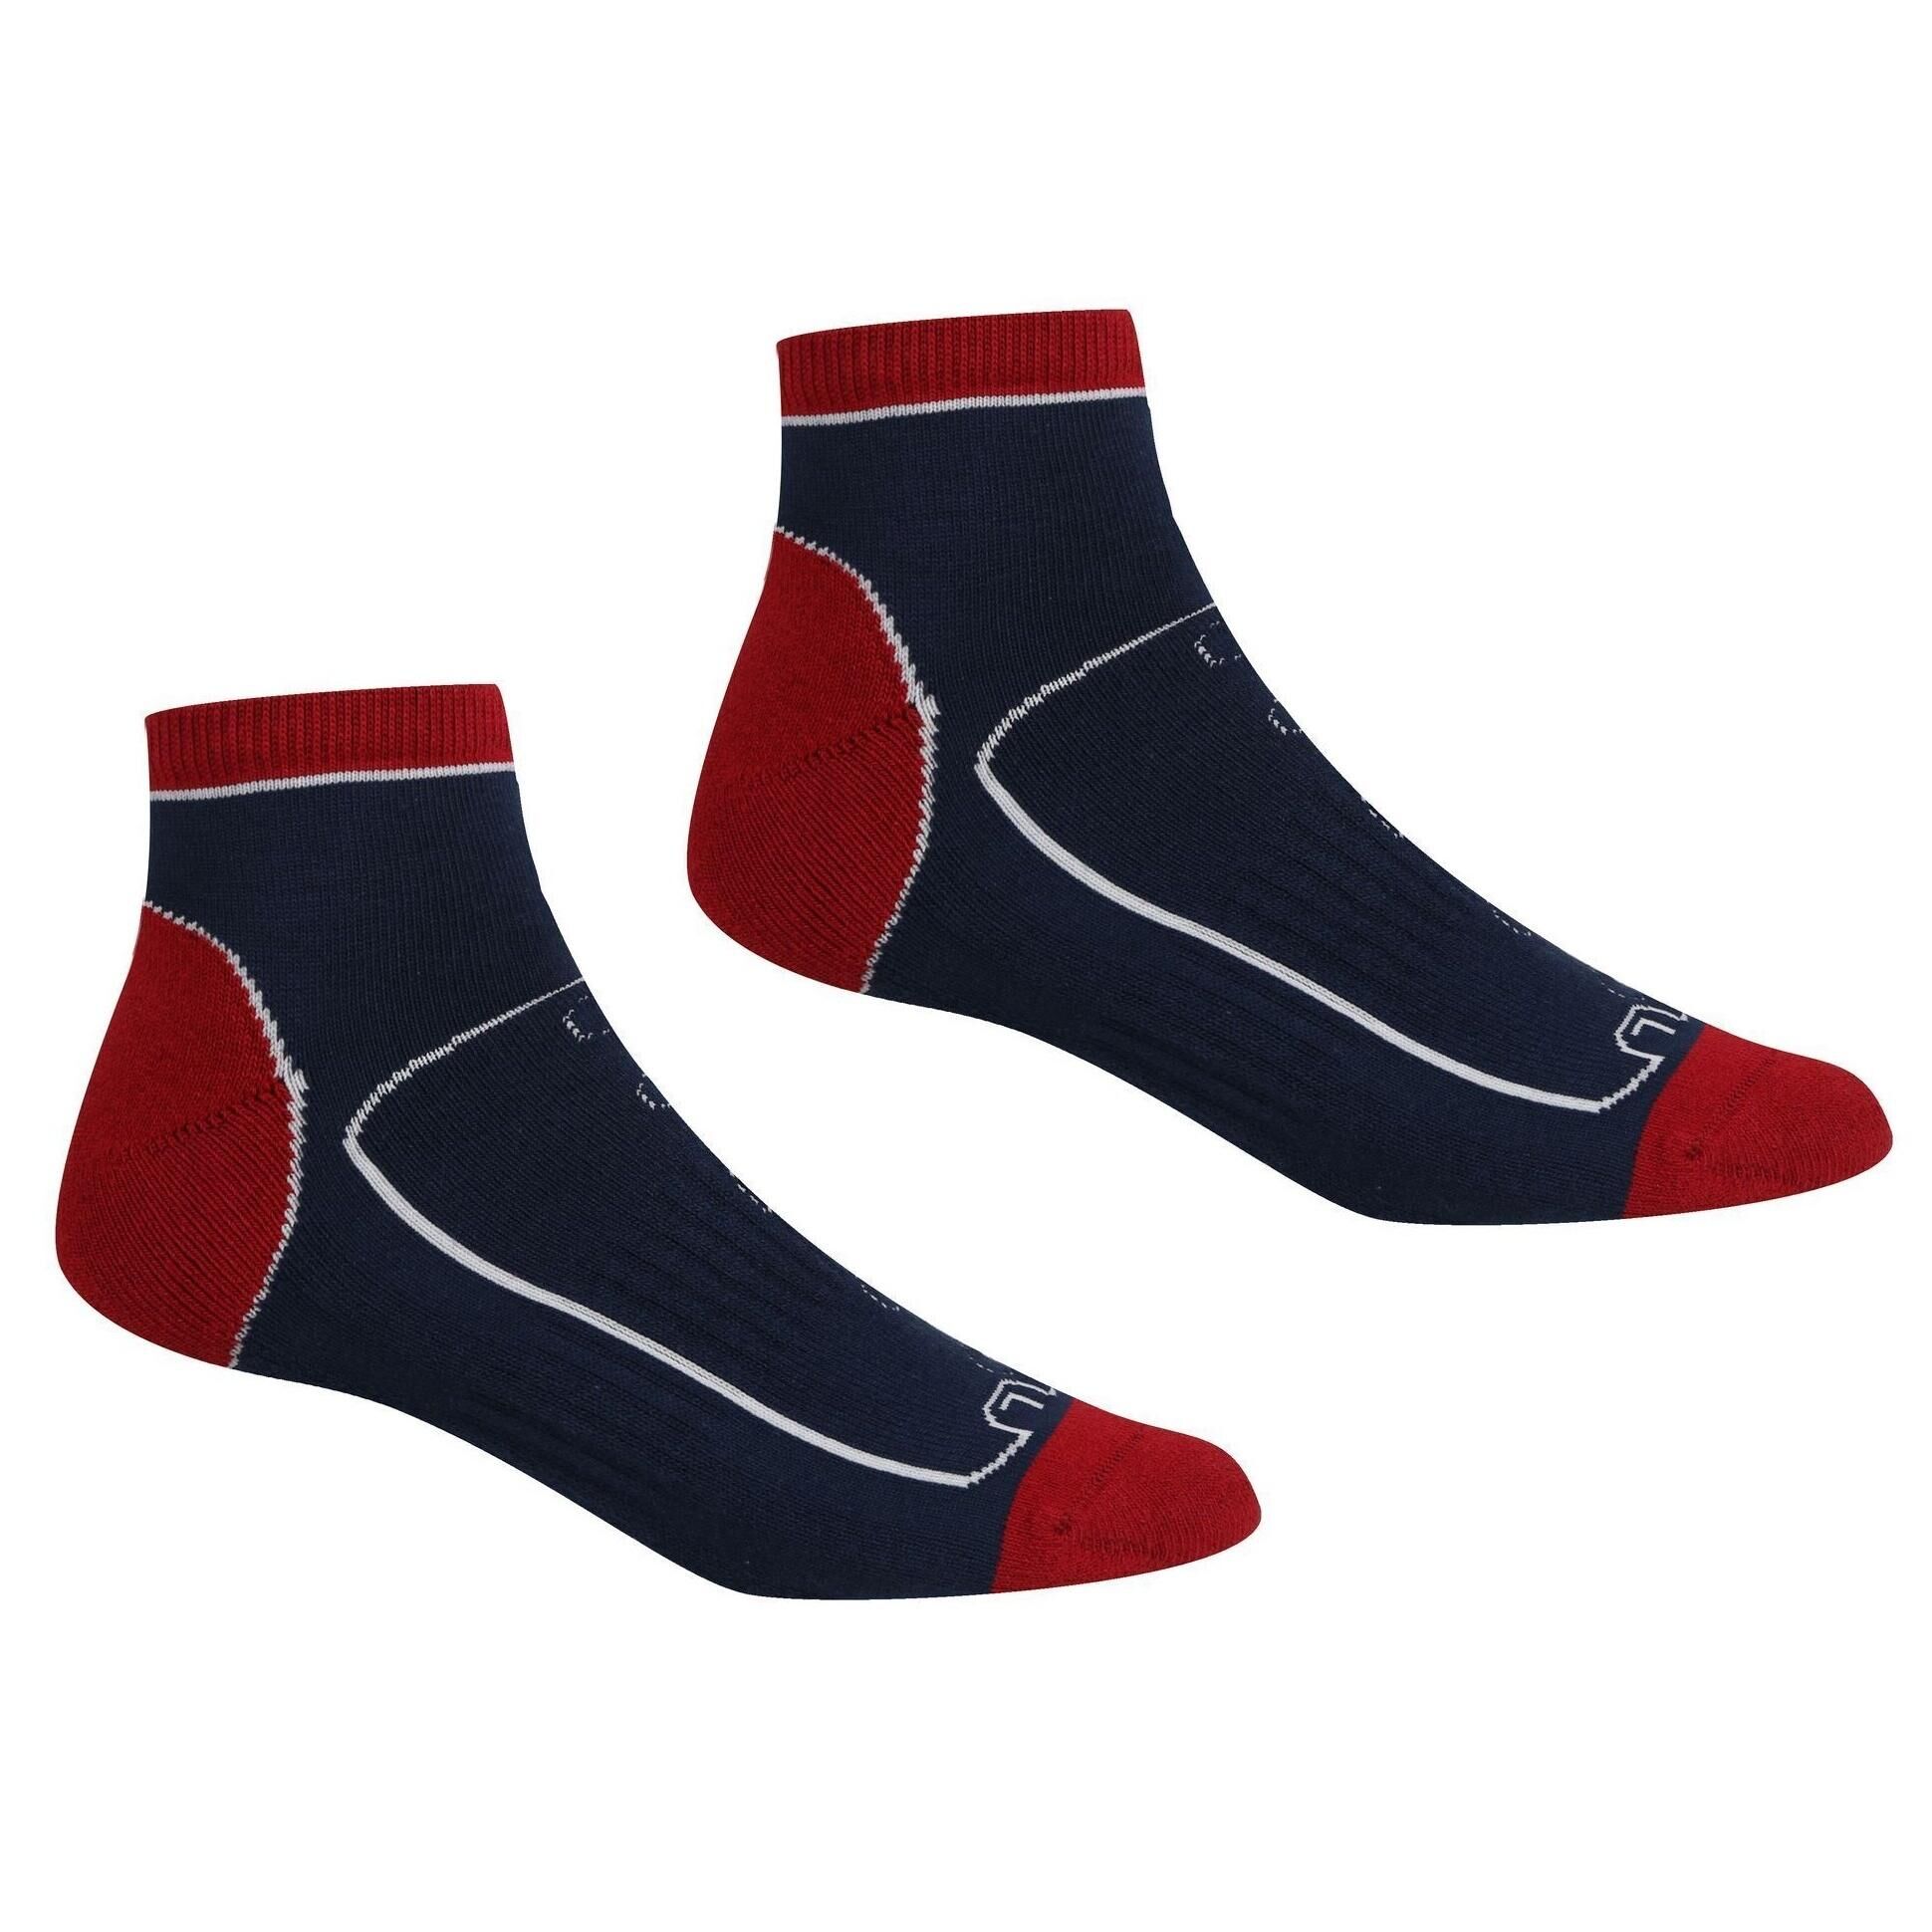 REGATTA Mens Samaris Trail Ankle Socks (Pack of 2) (Navy/Dark Red)